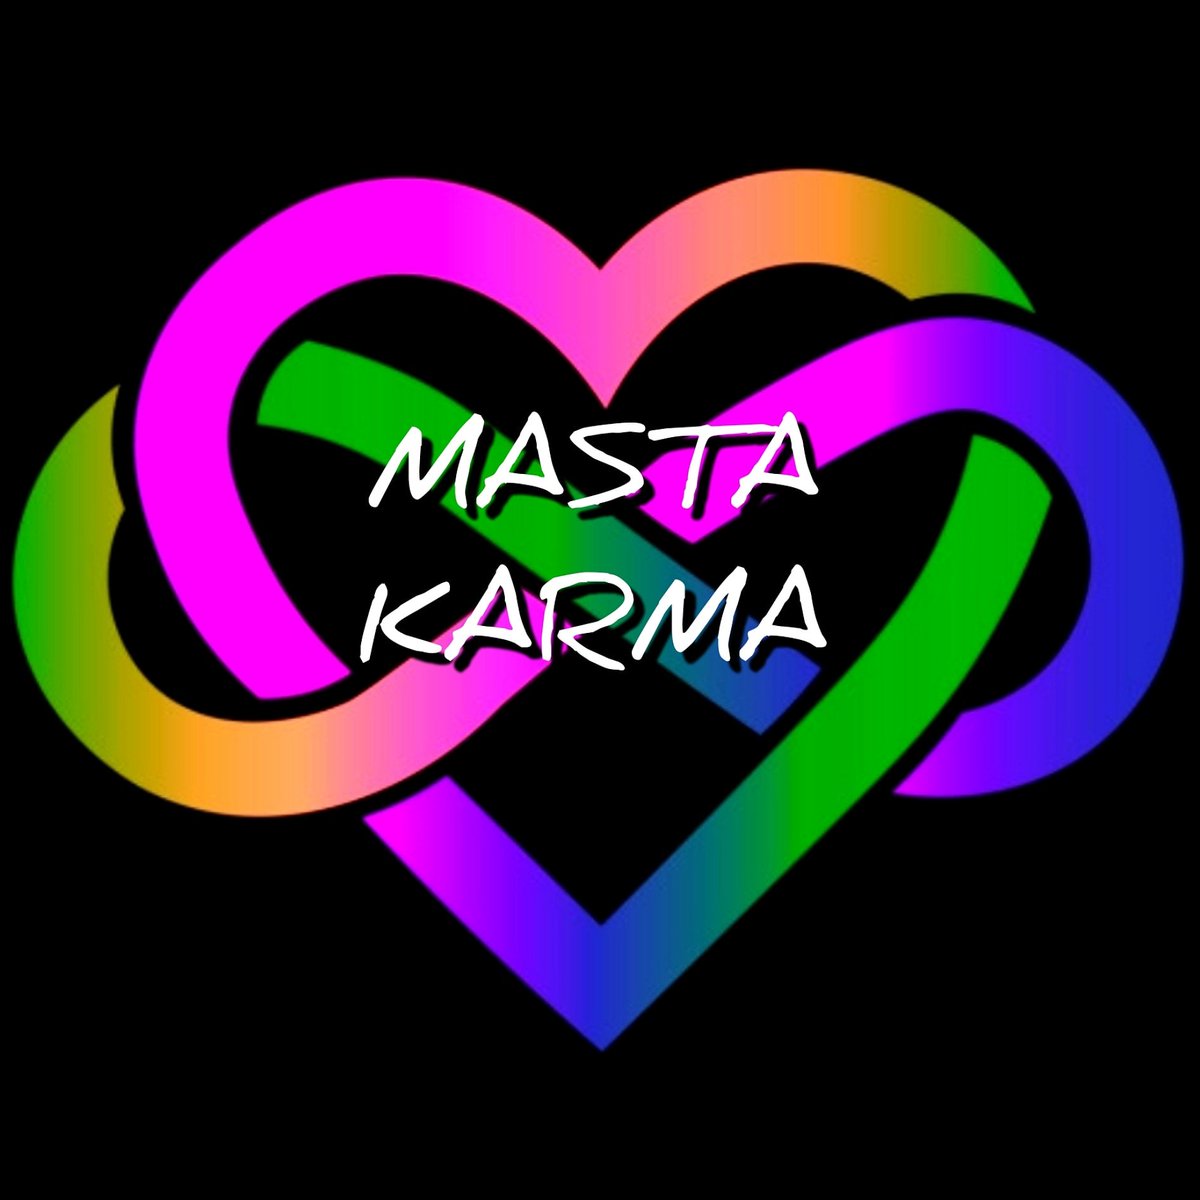 Vibes! 🕉☯️💜♾🔥👑👽🖖
@MsMastaFoXX Is A #MastaKarma Teacher|EnergyReader|ChakraBalancer|LawOfAttractionSpecialist|CosmicCoach|5DBeing @THCTribe @CosmicFamVIP @TeamMsMastaFoXX @loaspecialist #Mastativity #Karma
MsMastaFoXX.com
#Vibes #YinYang #WhatGoesAroundComesAround